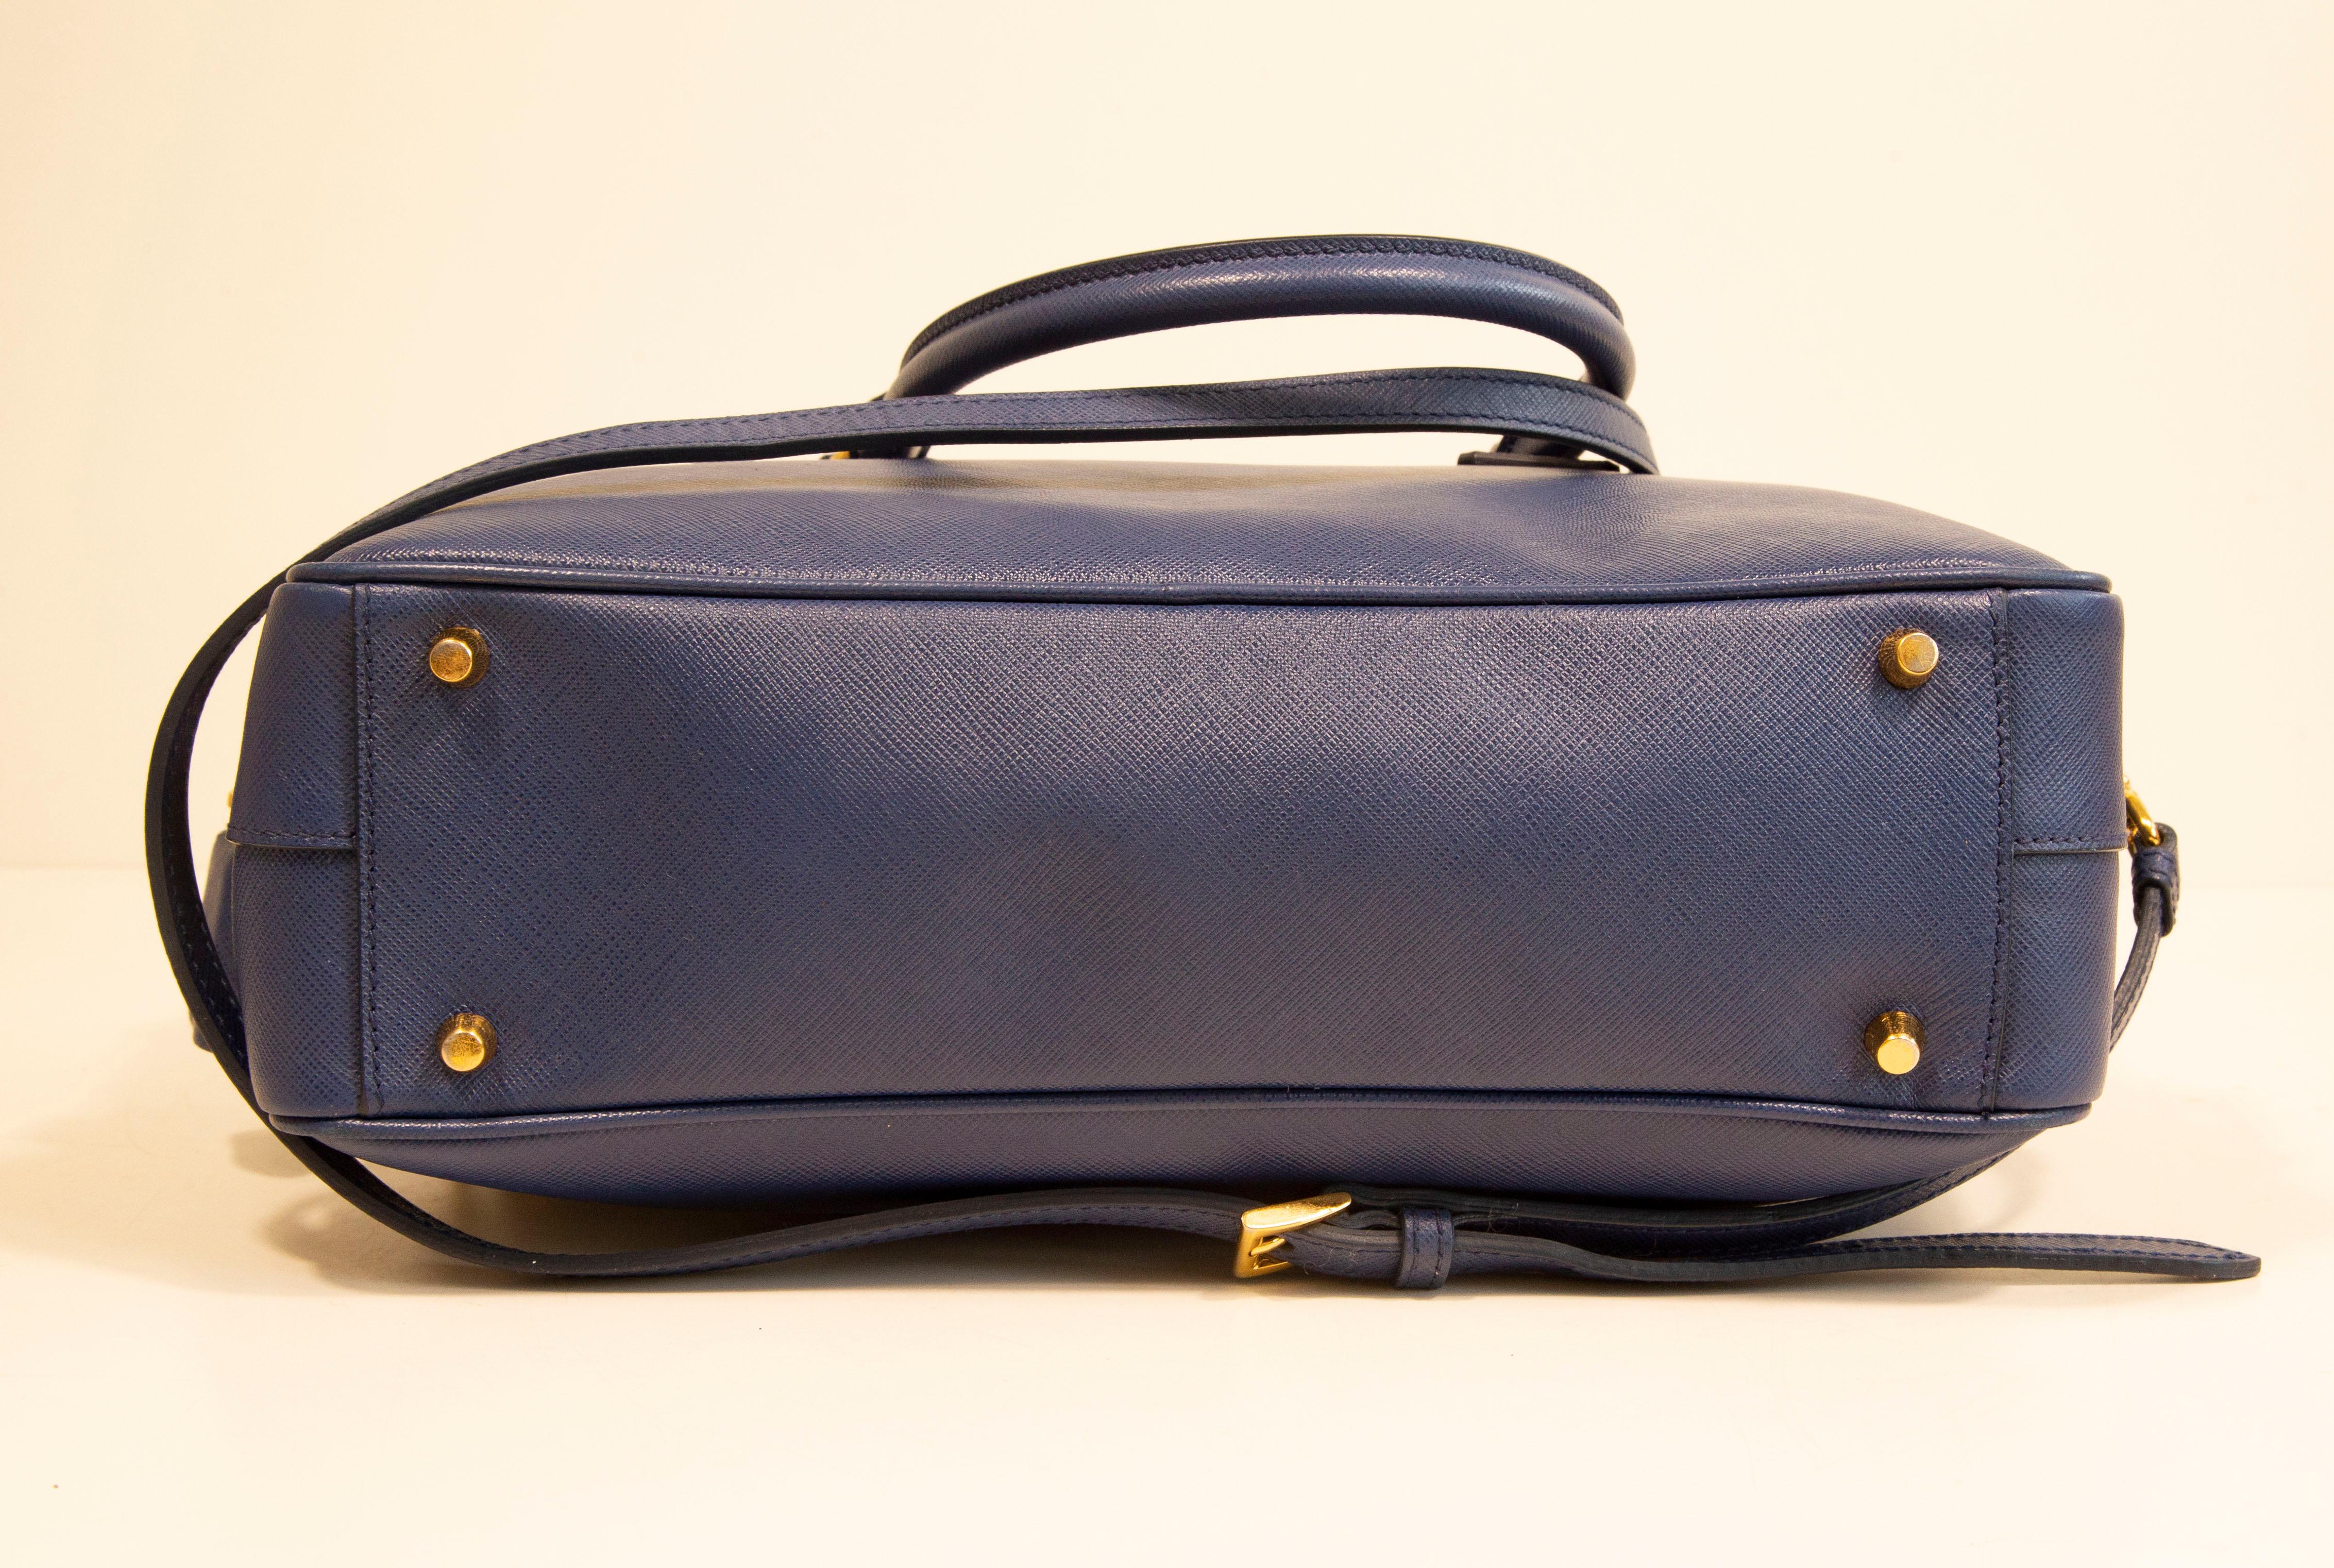  Prada Galleria Two Way Bag in Blue Saffiano Leather 4